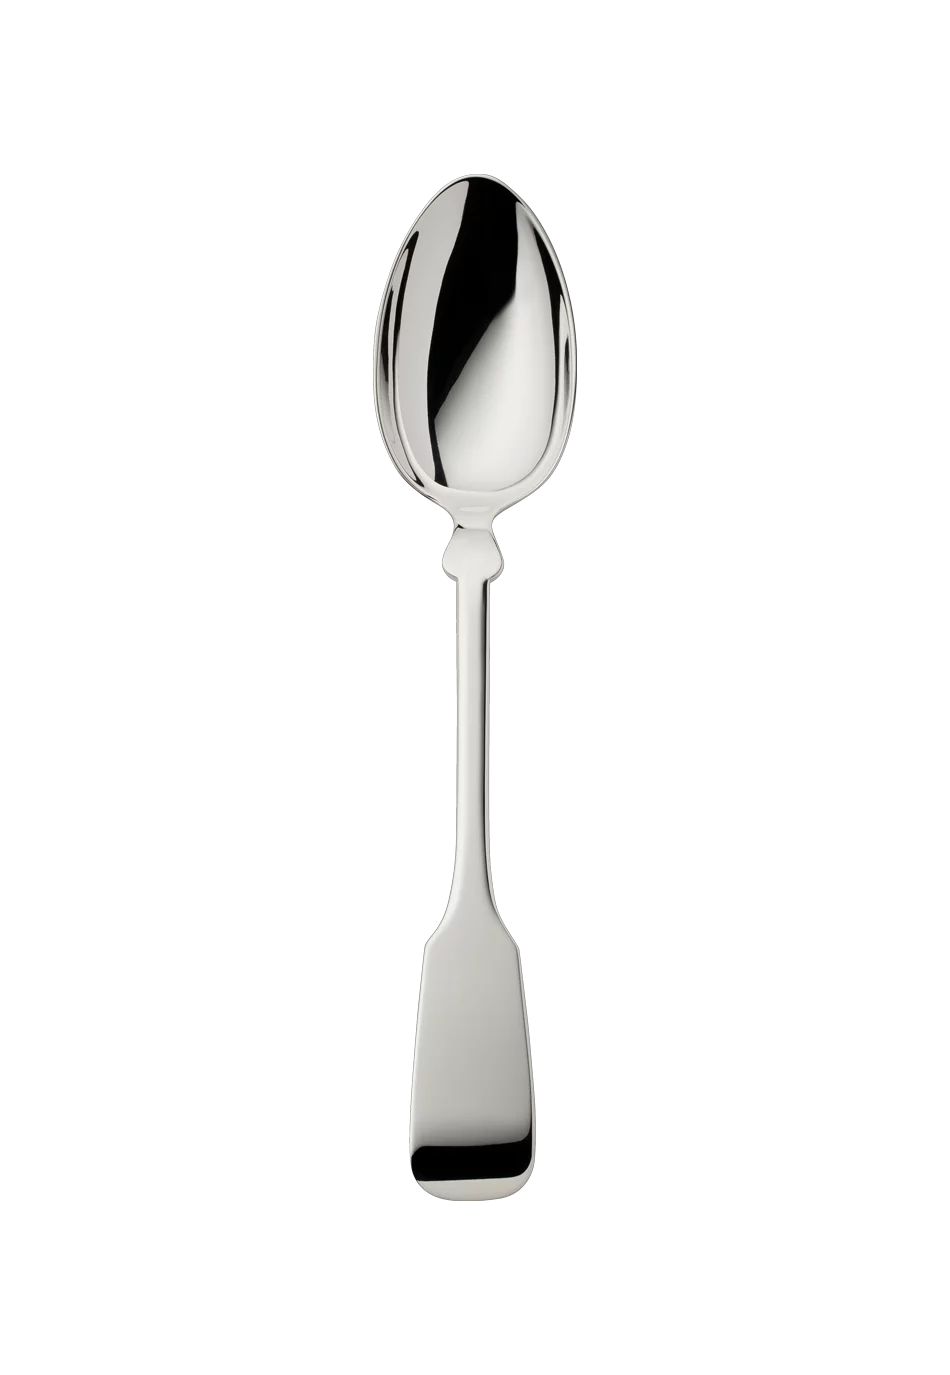 Spaten Table Spoon (150g massive silverplated)